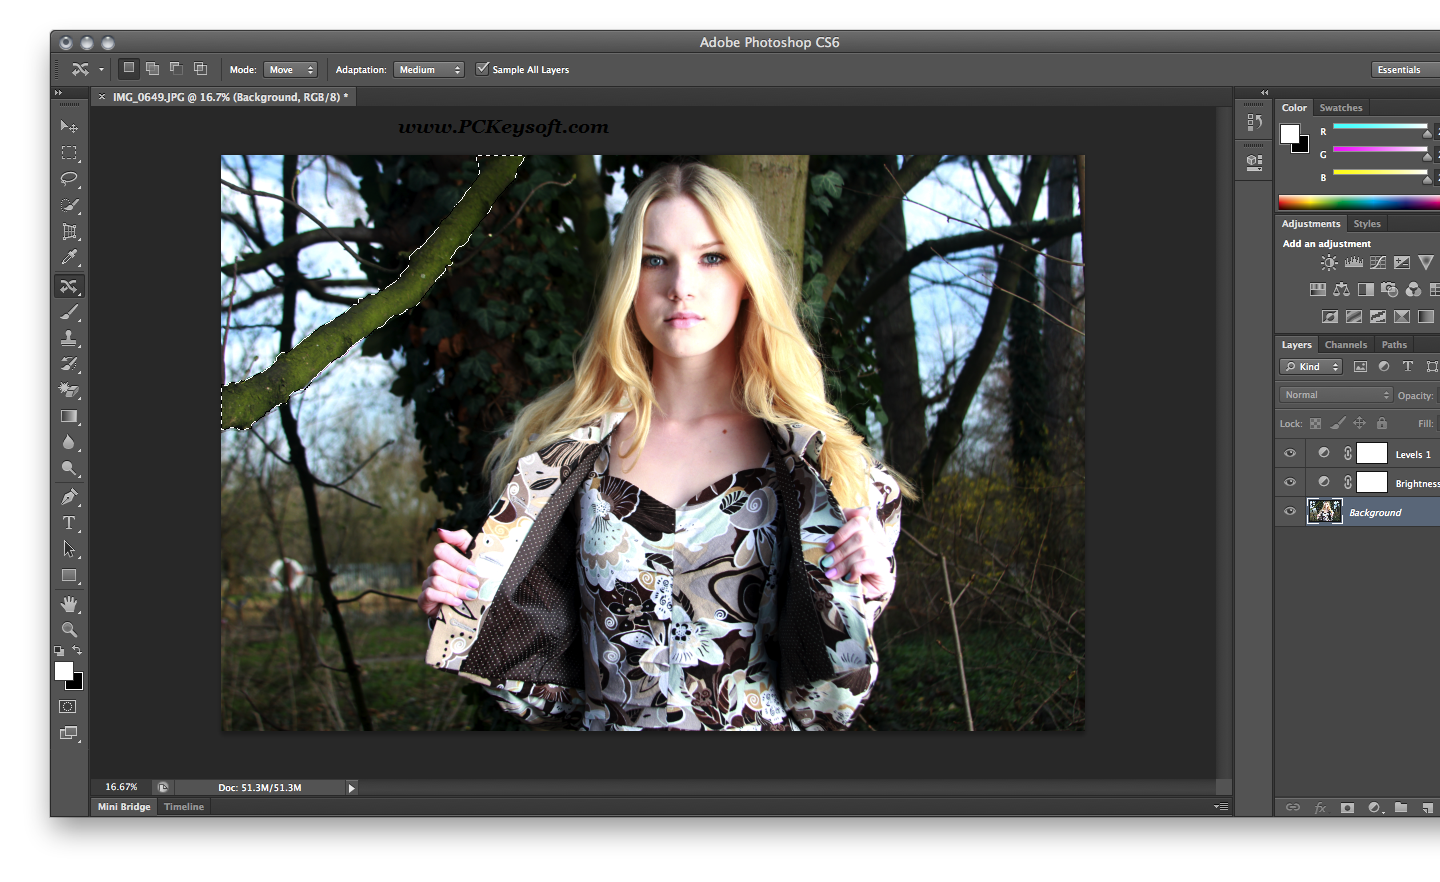 Adobe photoshop cs6 keygen download